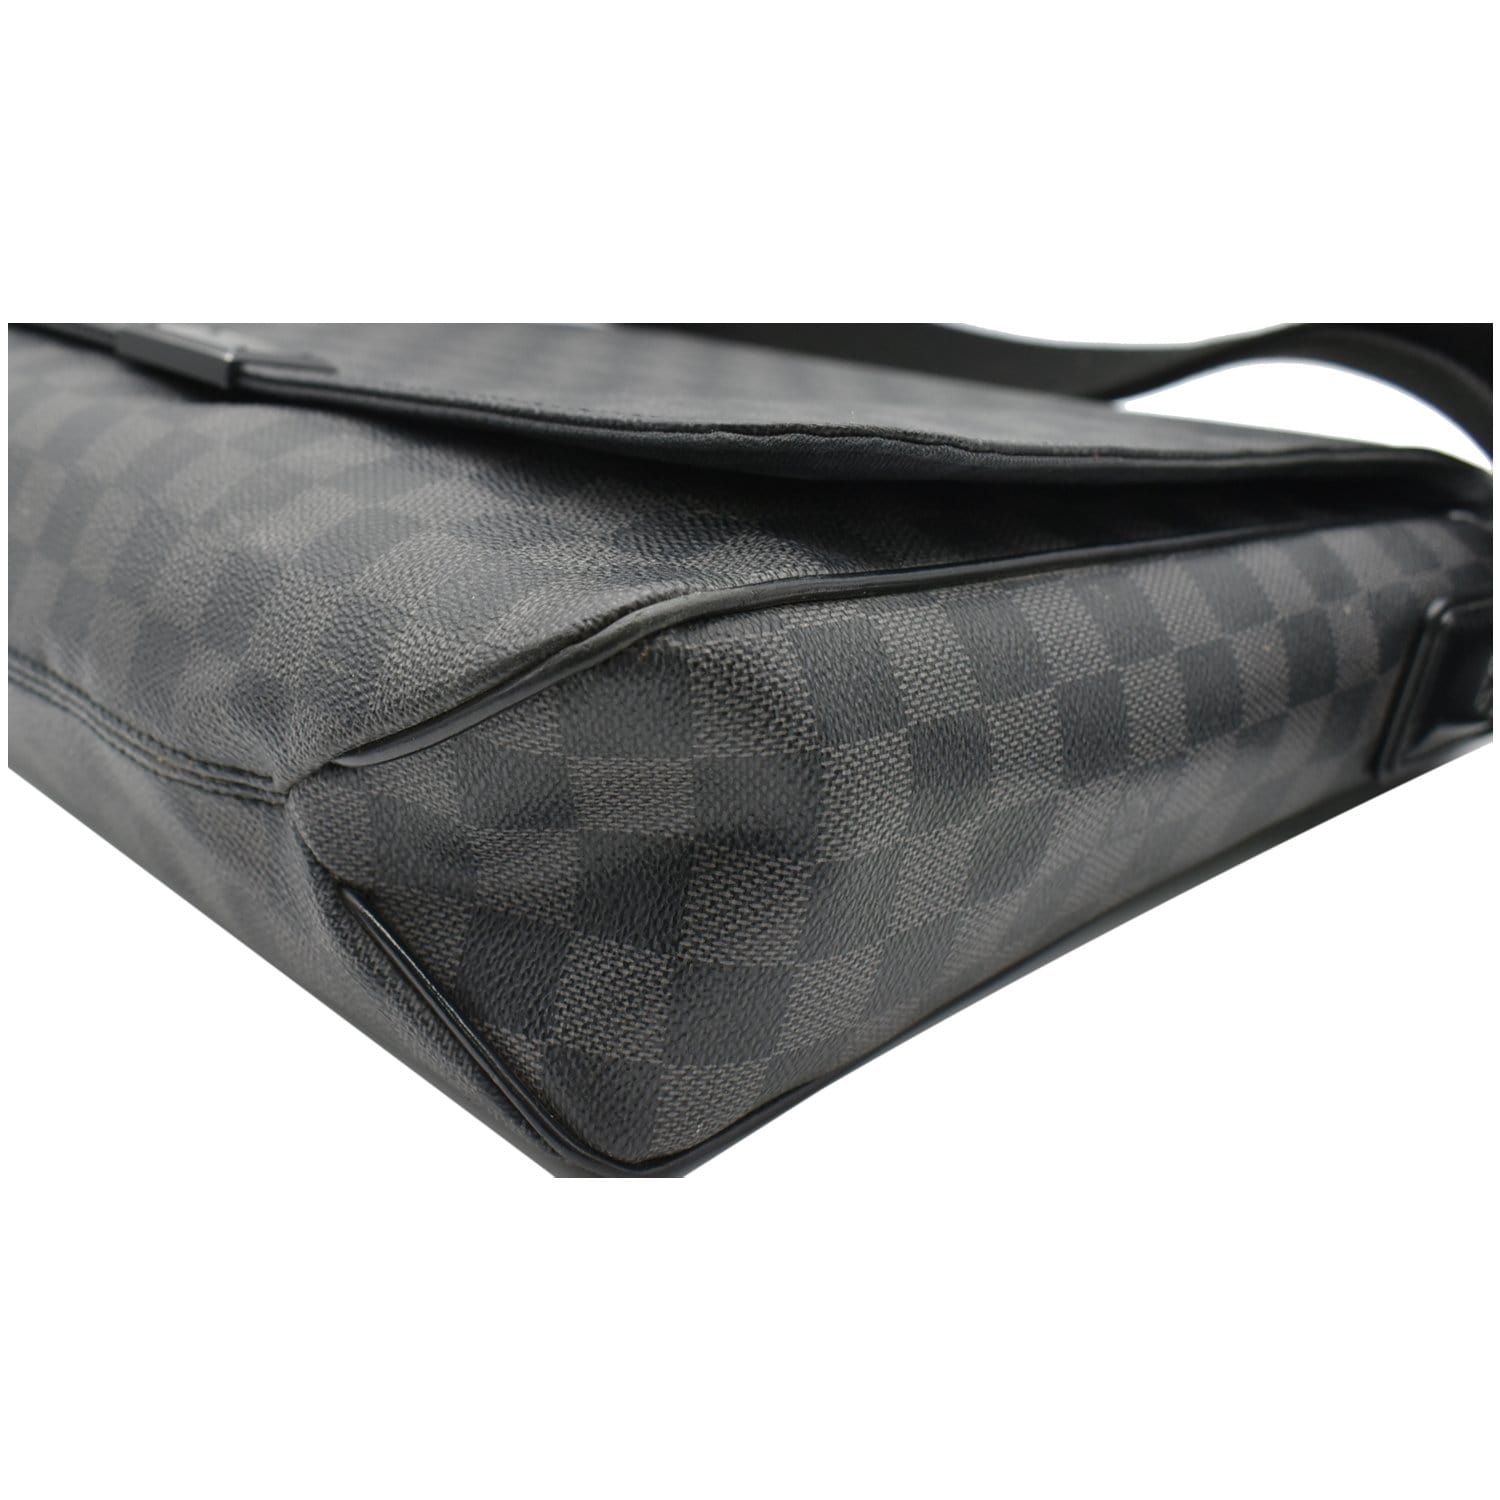 Louis Vuitton Damier Graphite District GM - Grey Messenger Bags